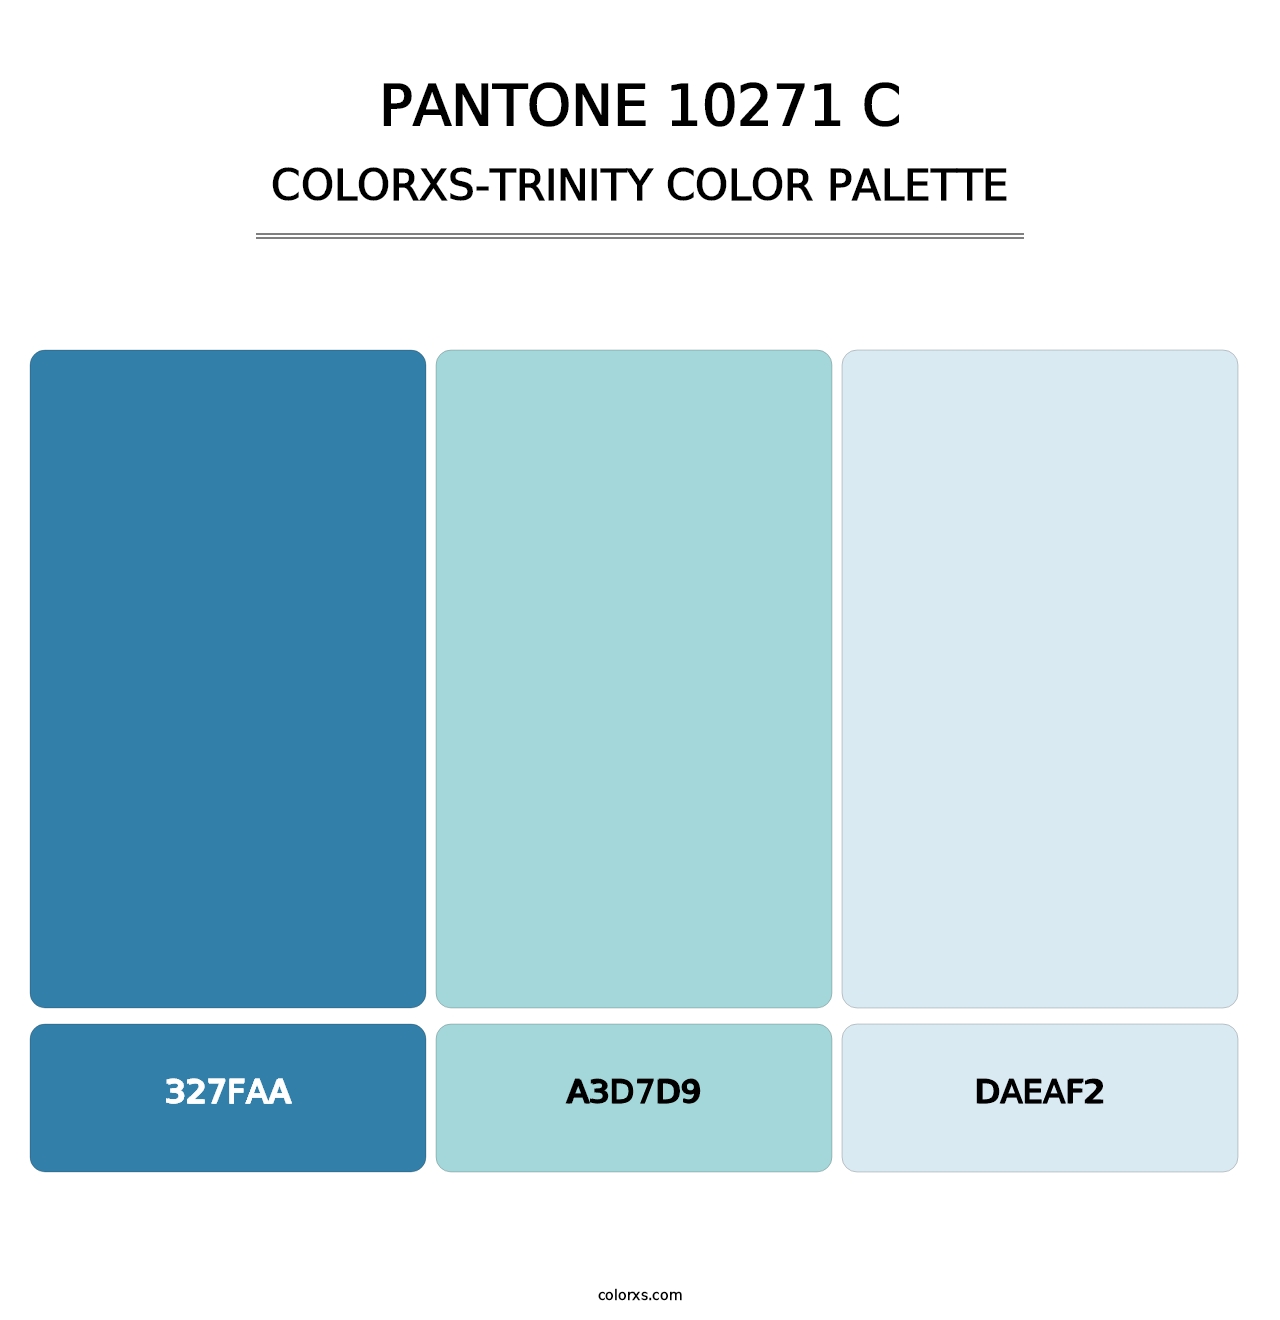 PANTONE 10271 C - Colorxs Trinity Palette